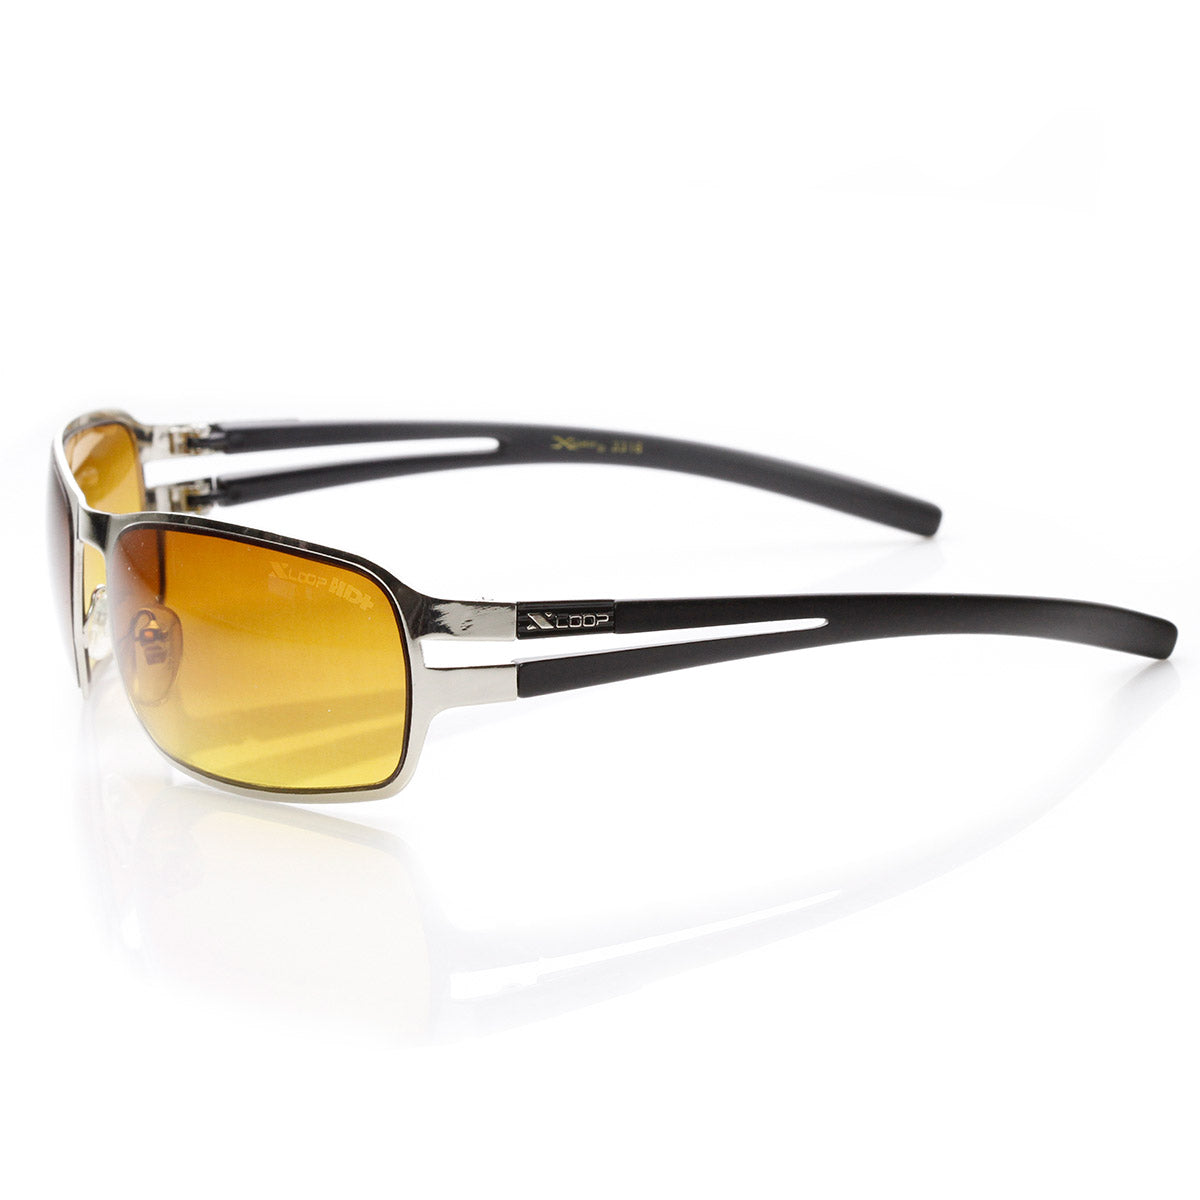 X-Loop HD Driving Lens Metal Frame Sports Sunglasses - sunglass.la